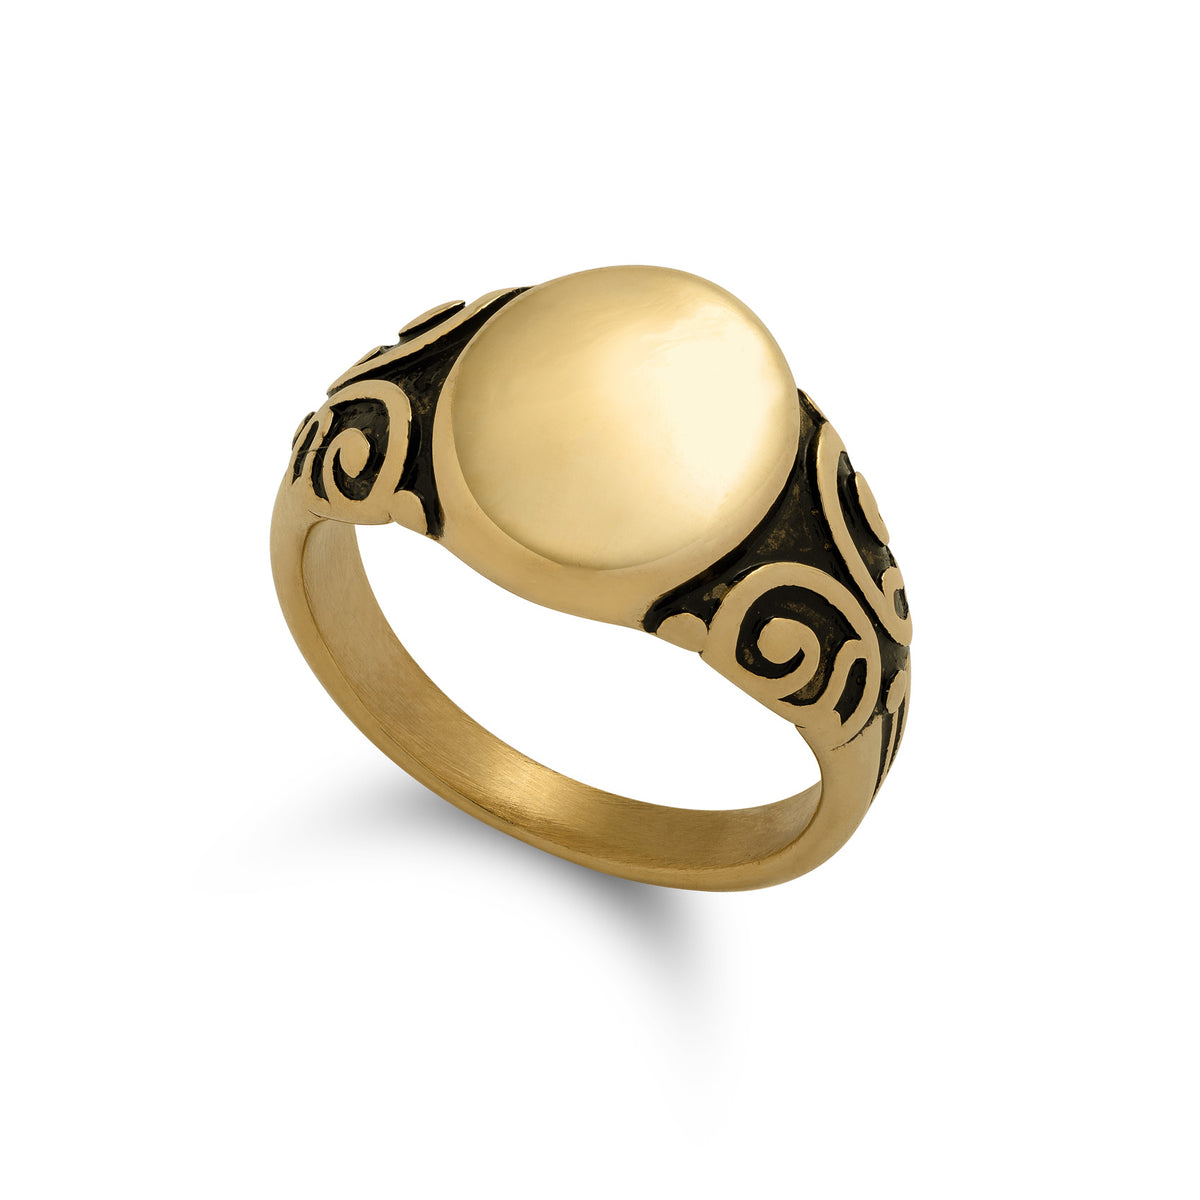 Elegant gold signet ring on white background